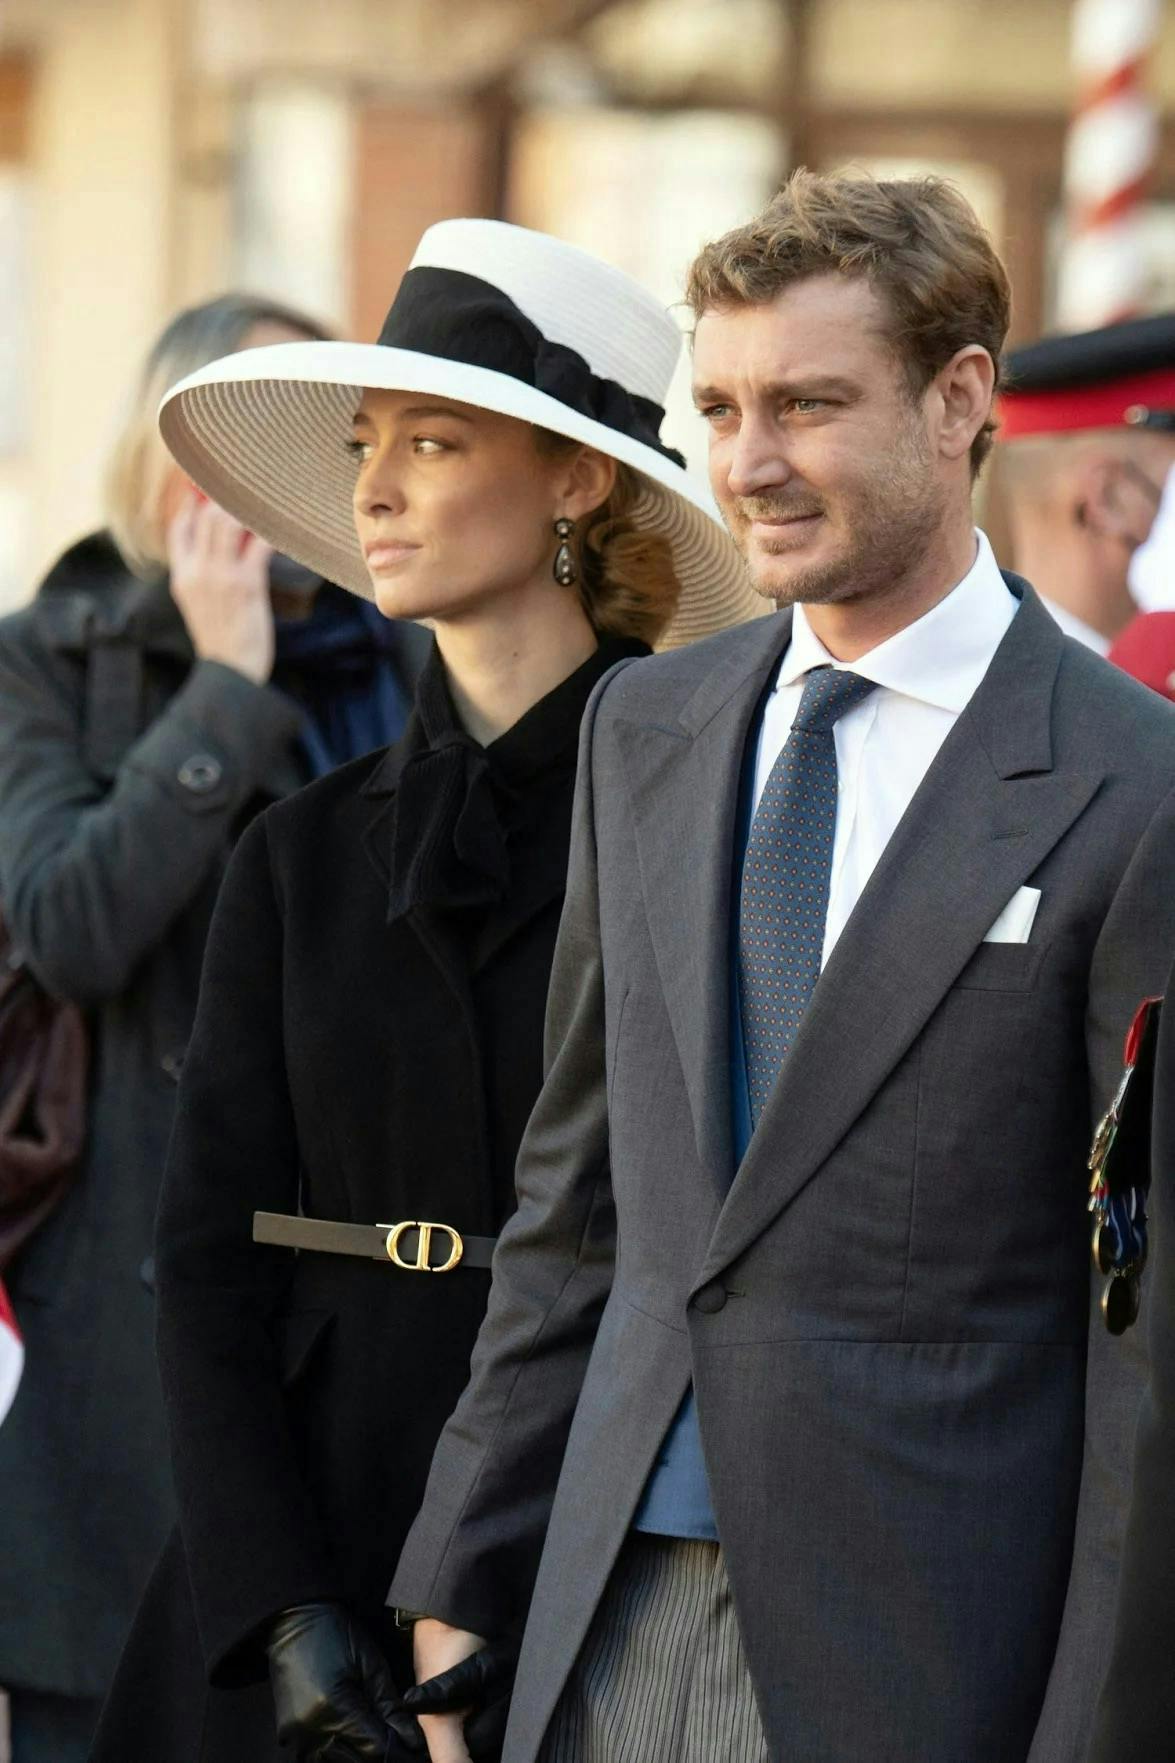 tie accessories accessory hat clothing suit coat overcoat person sun hat